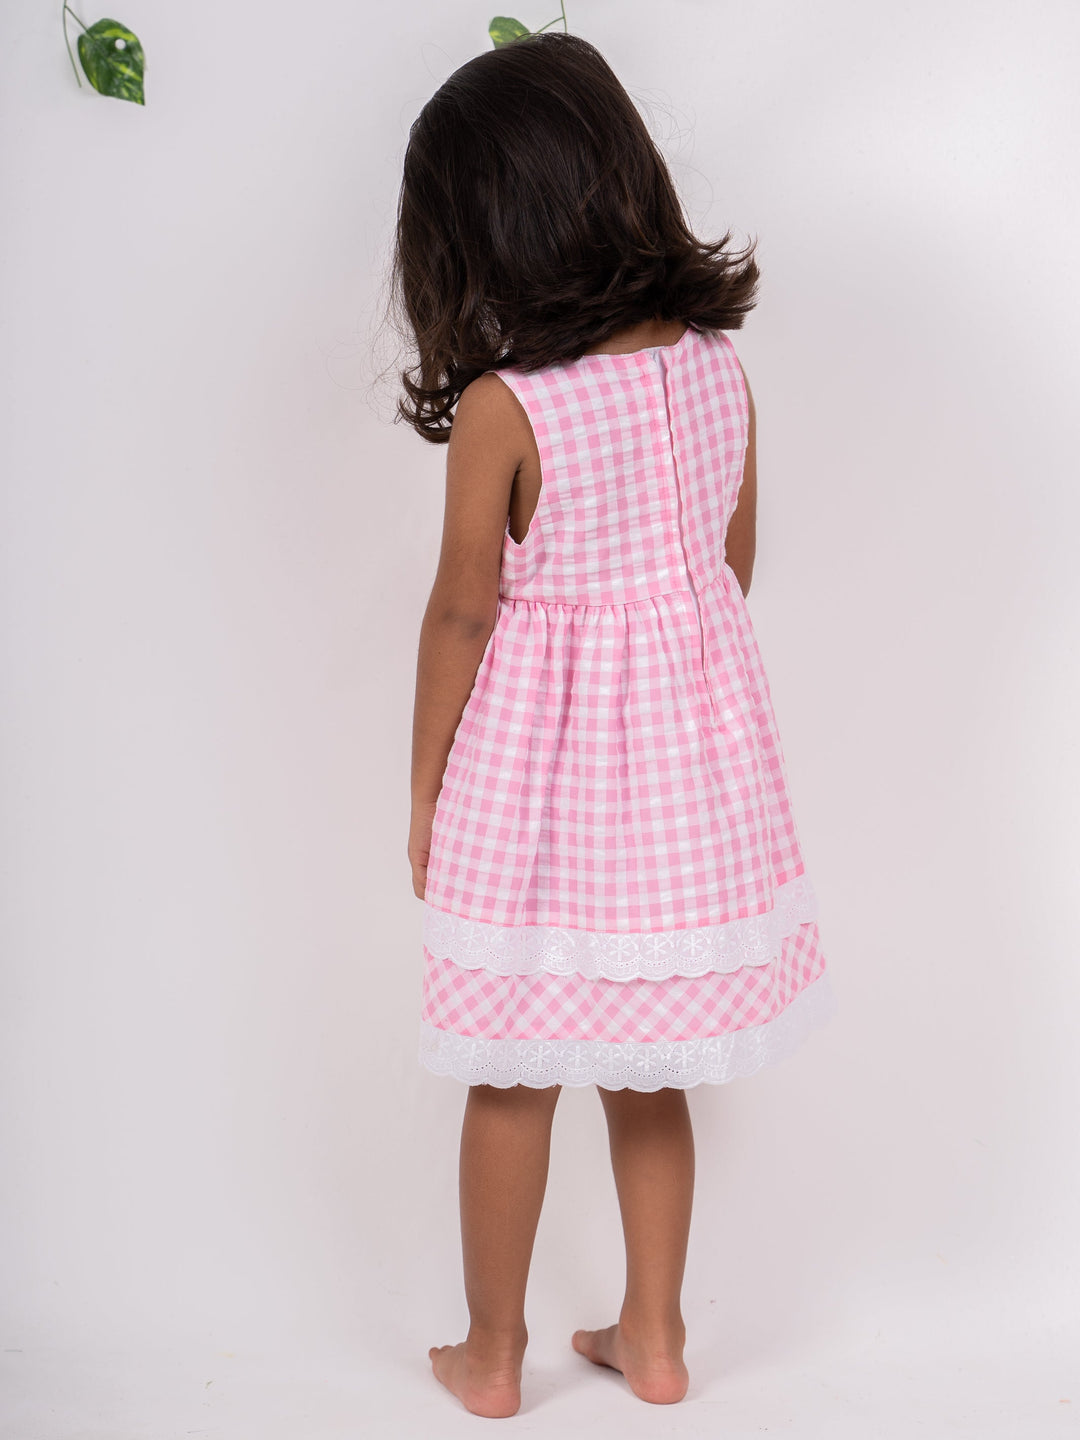 The Nesavu Frocks & Dresses Pink Checked Lace Designer Soft Cotton Frock For Girl Kids psr silks Nesavu